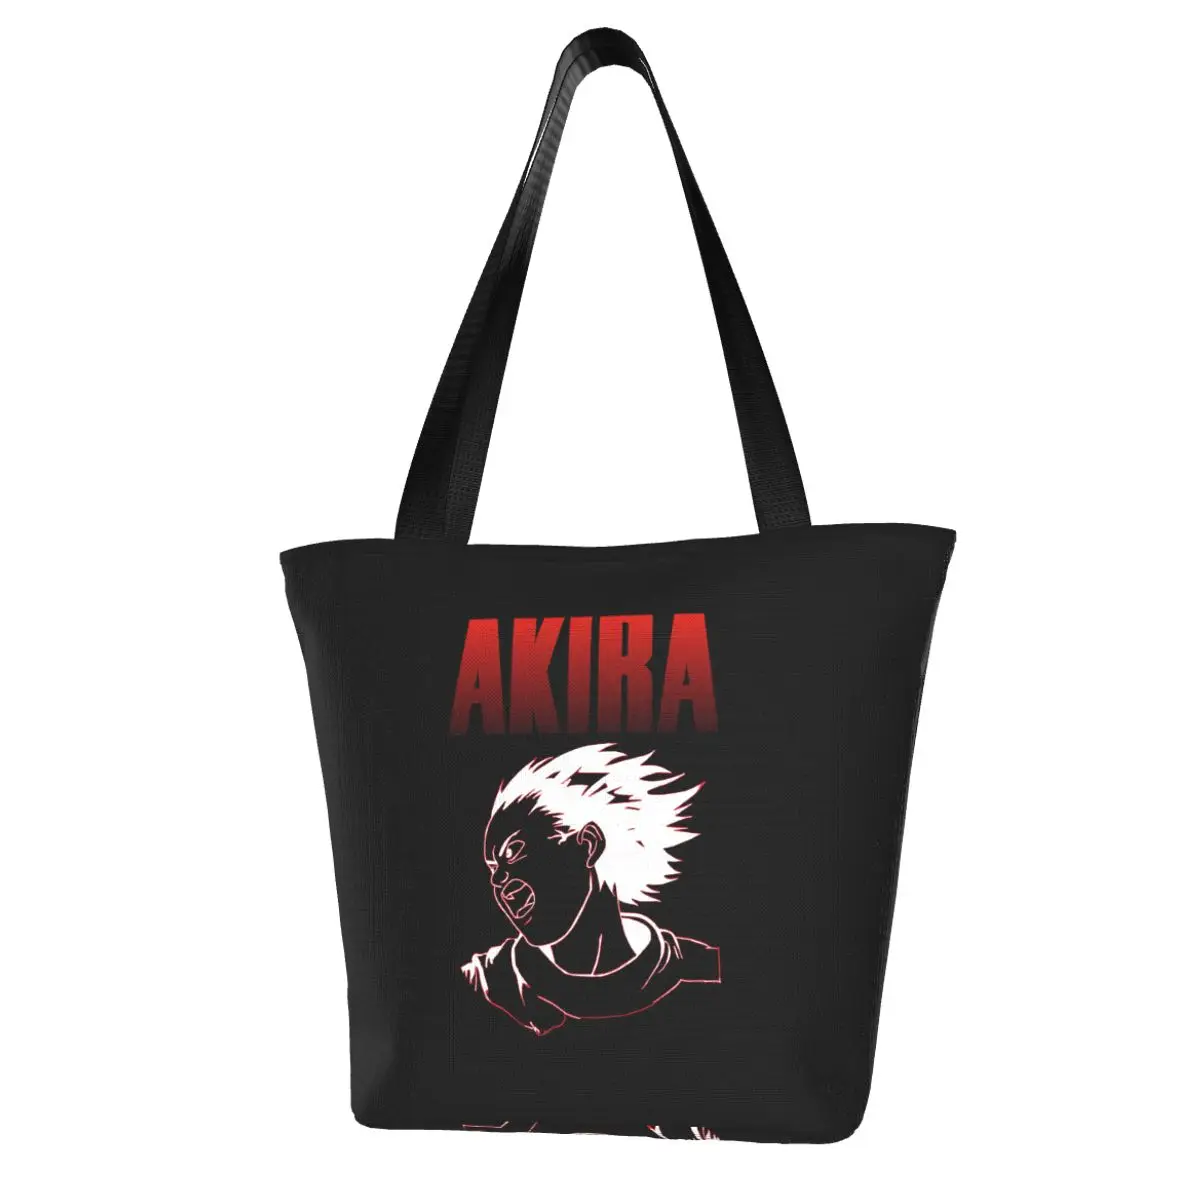 Akira Shopping Bag Aesthetic Cloth Outdoor Handbag Female Fashion Bags